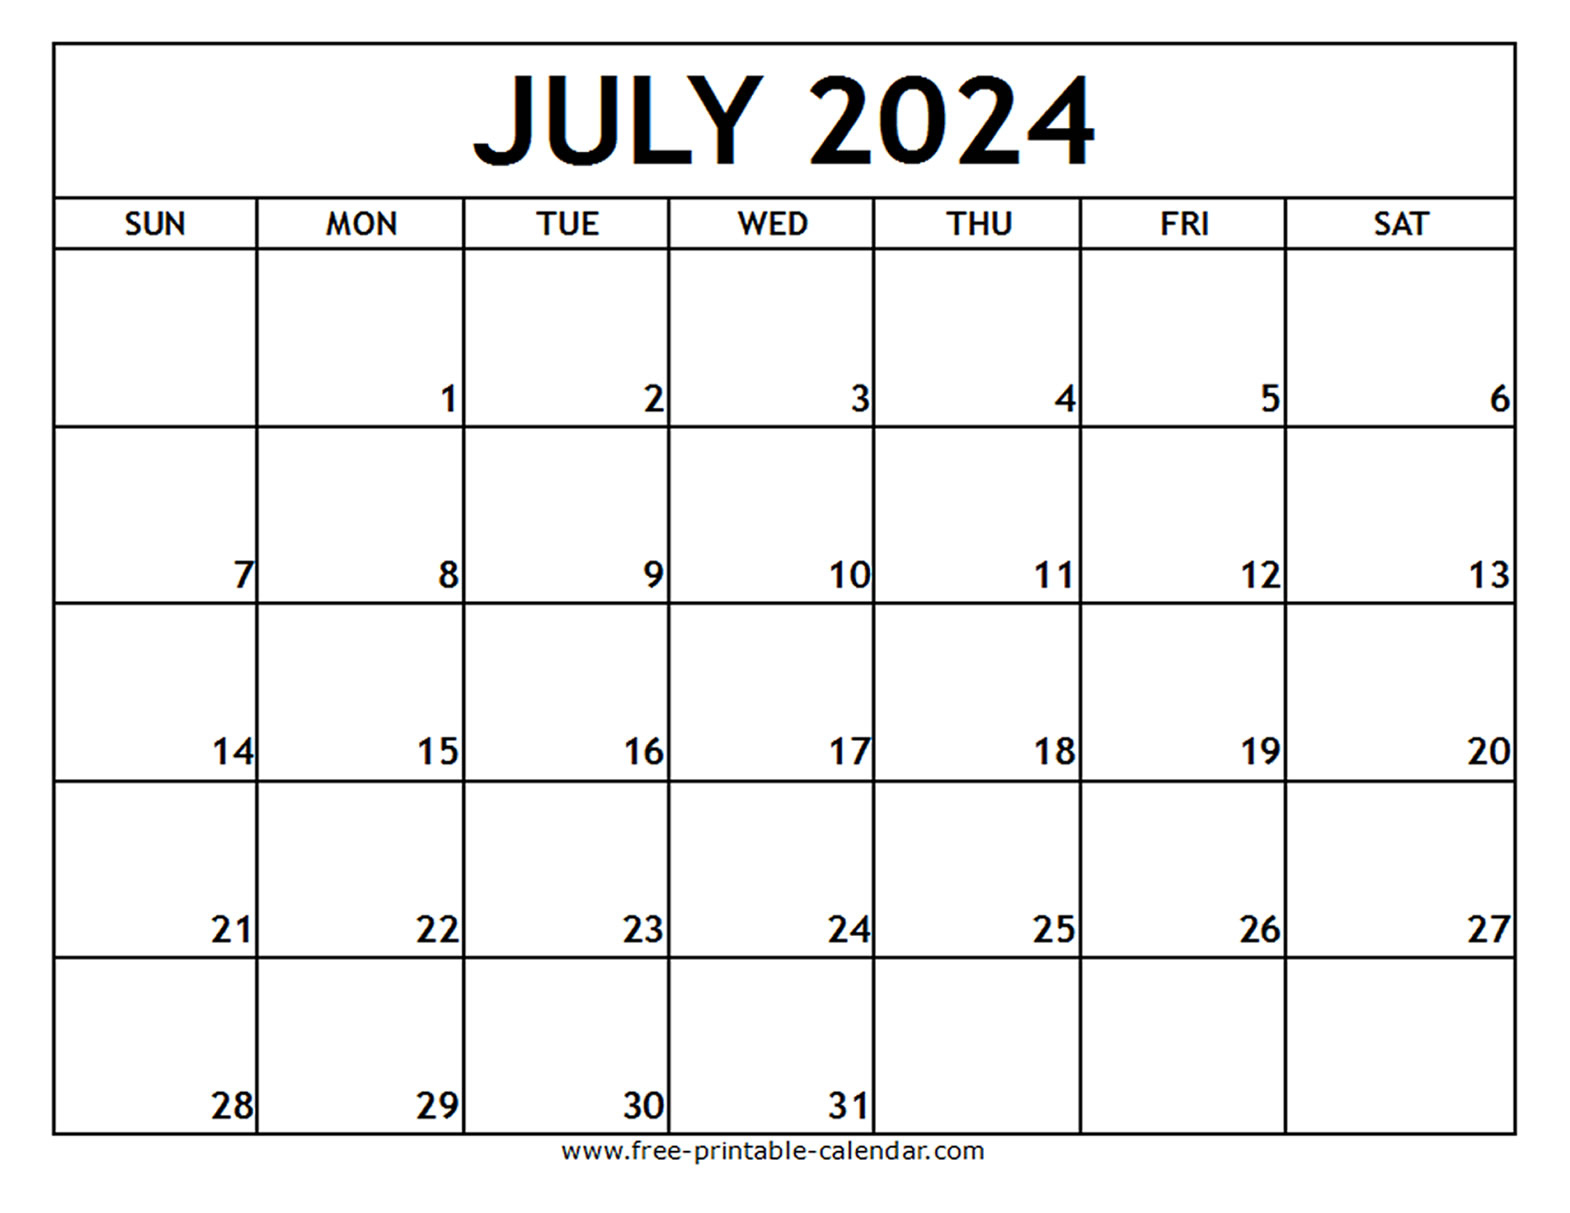 July 2024 Printable Calendar - Free-Printable-Calendar | Month Of July 2024 Printable Calendar